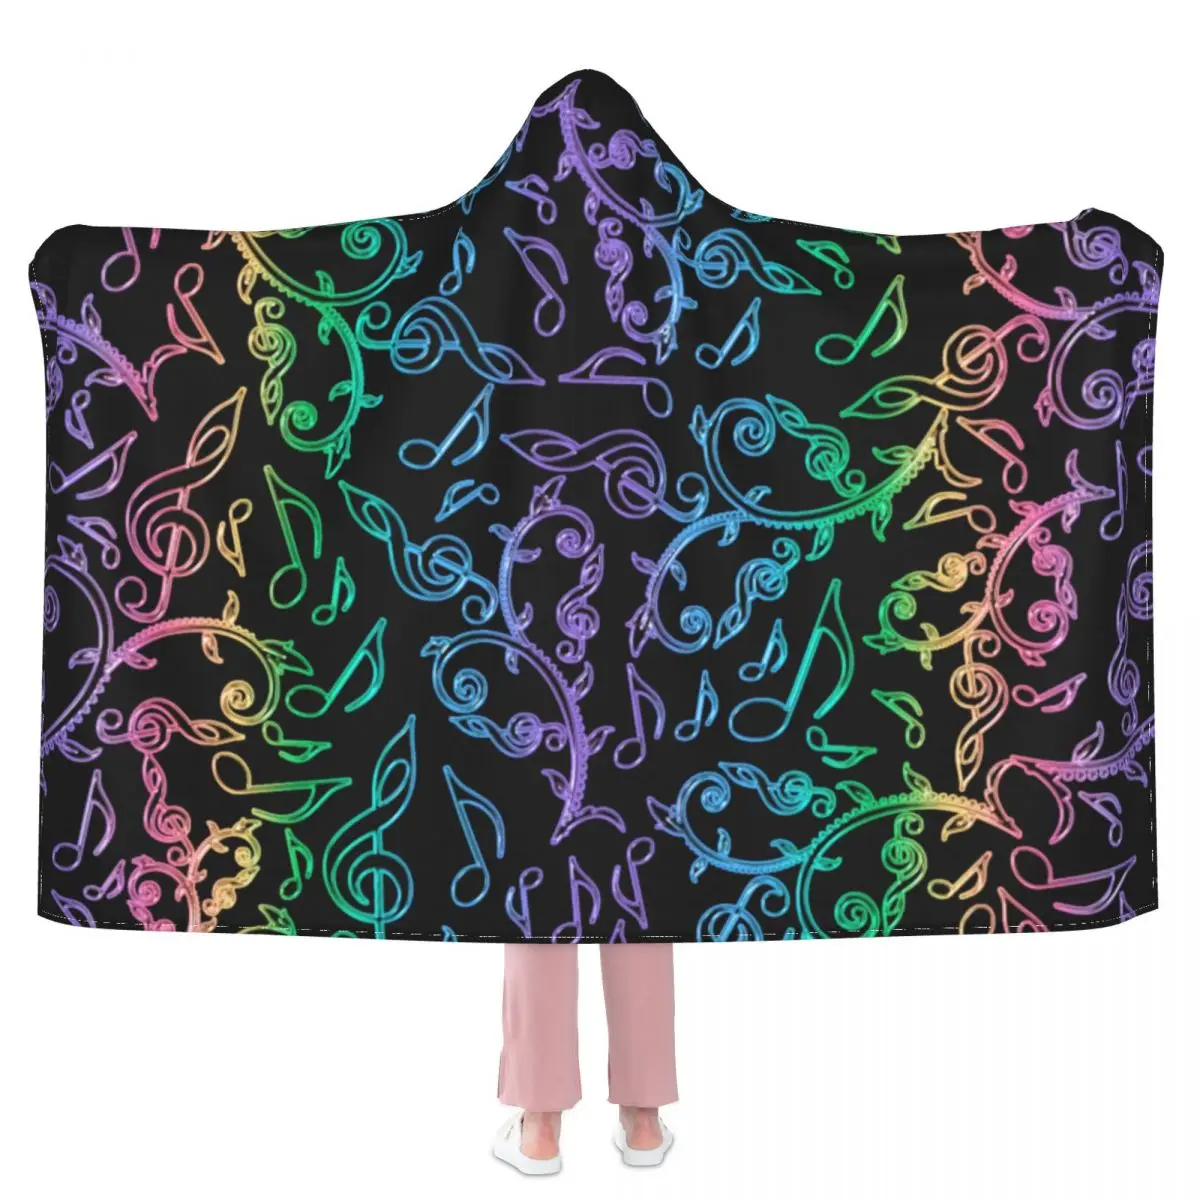 Rainbow Music Blanket Notes Pattern Cheap Big Hooded Bedspread Fleece For Photo Shoot Super Soft Blanket